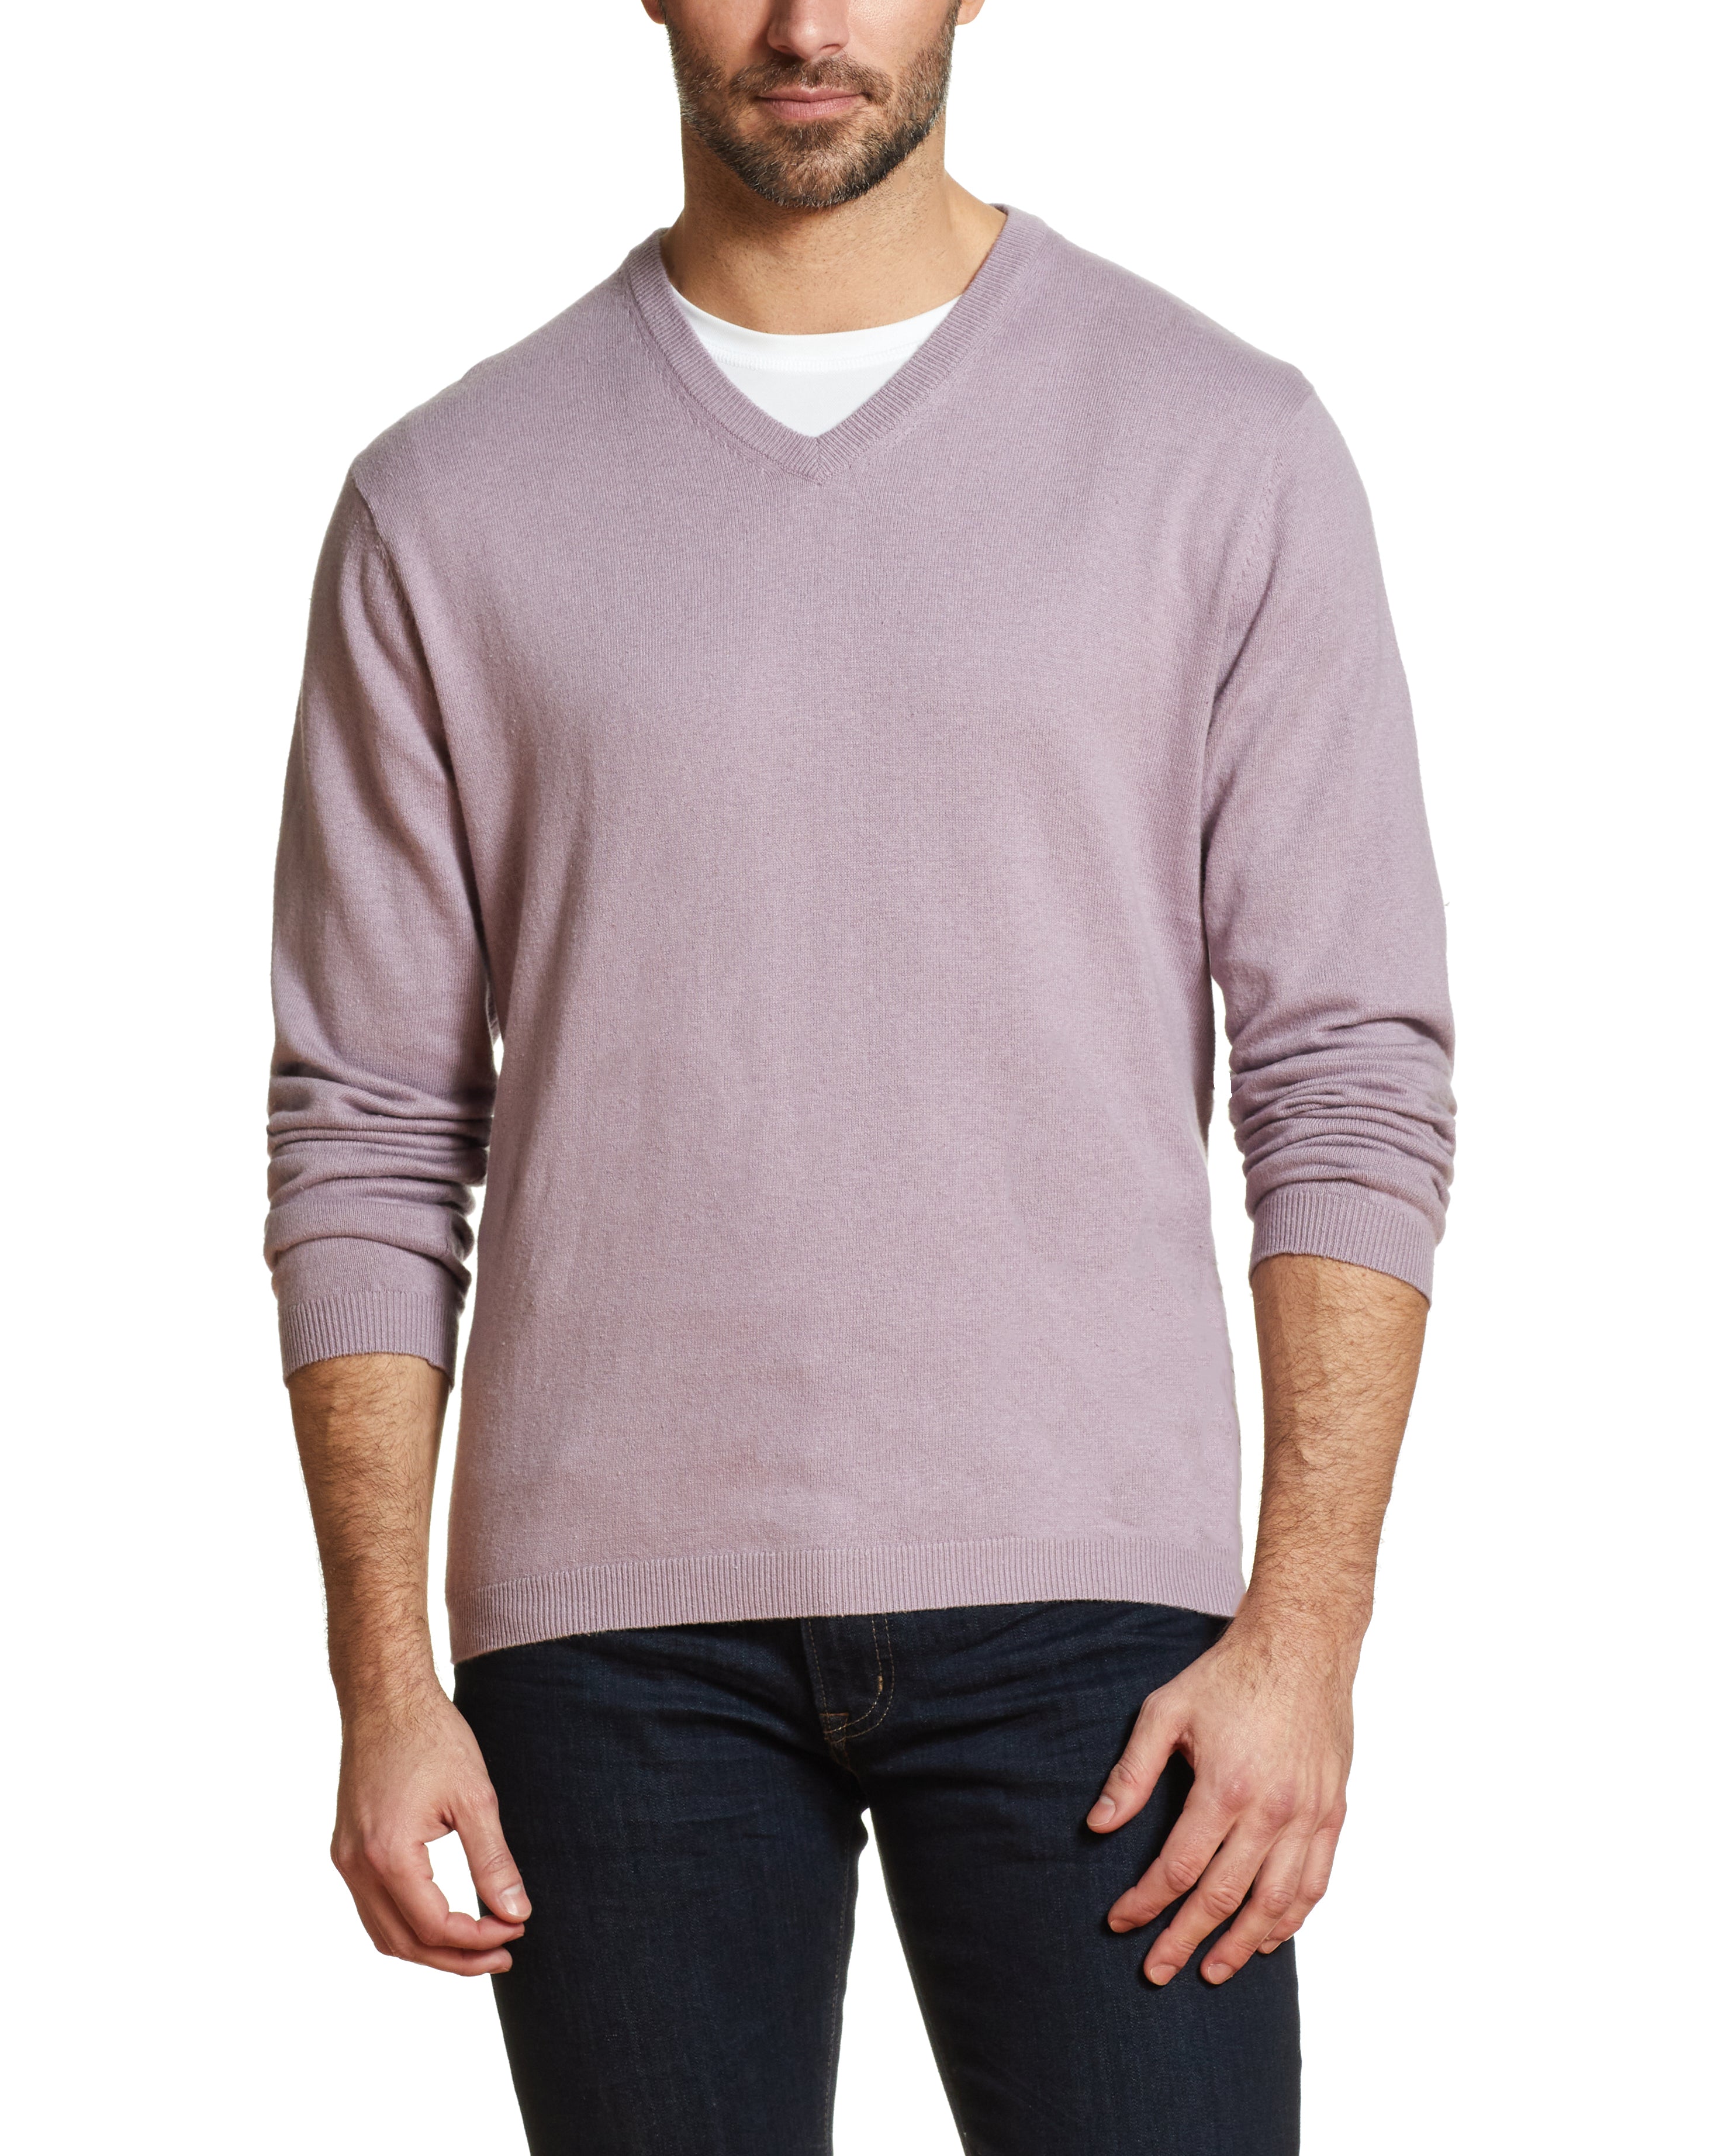 Cotton Cashmere V Neck Sweater in Mist